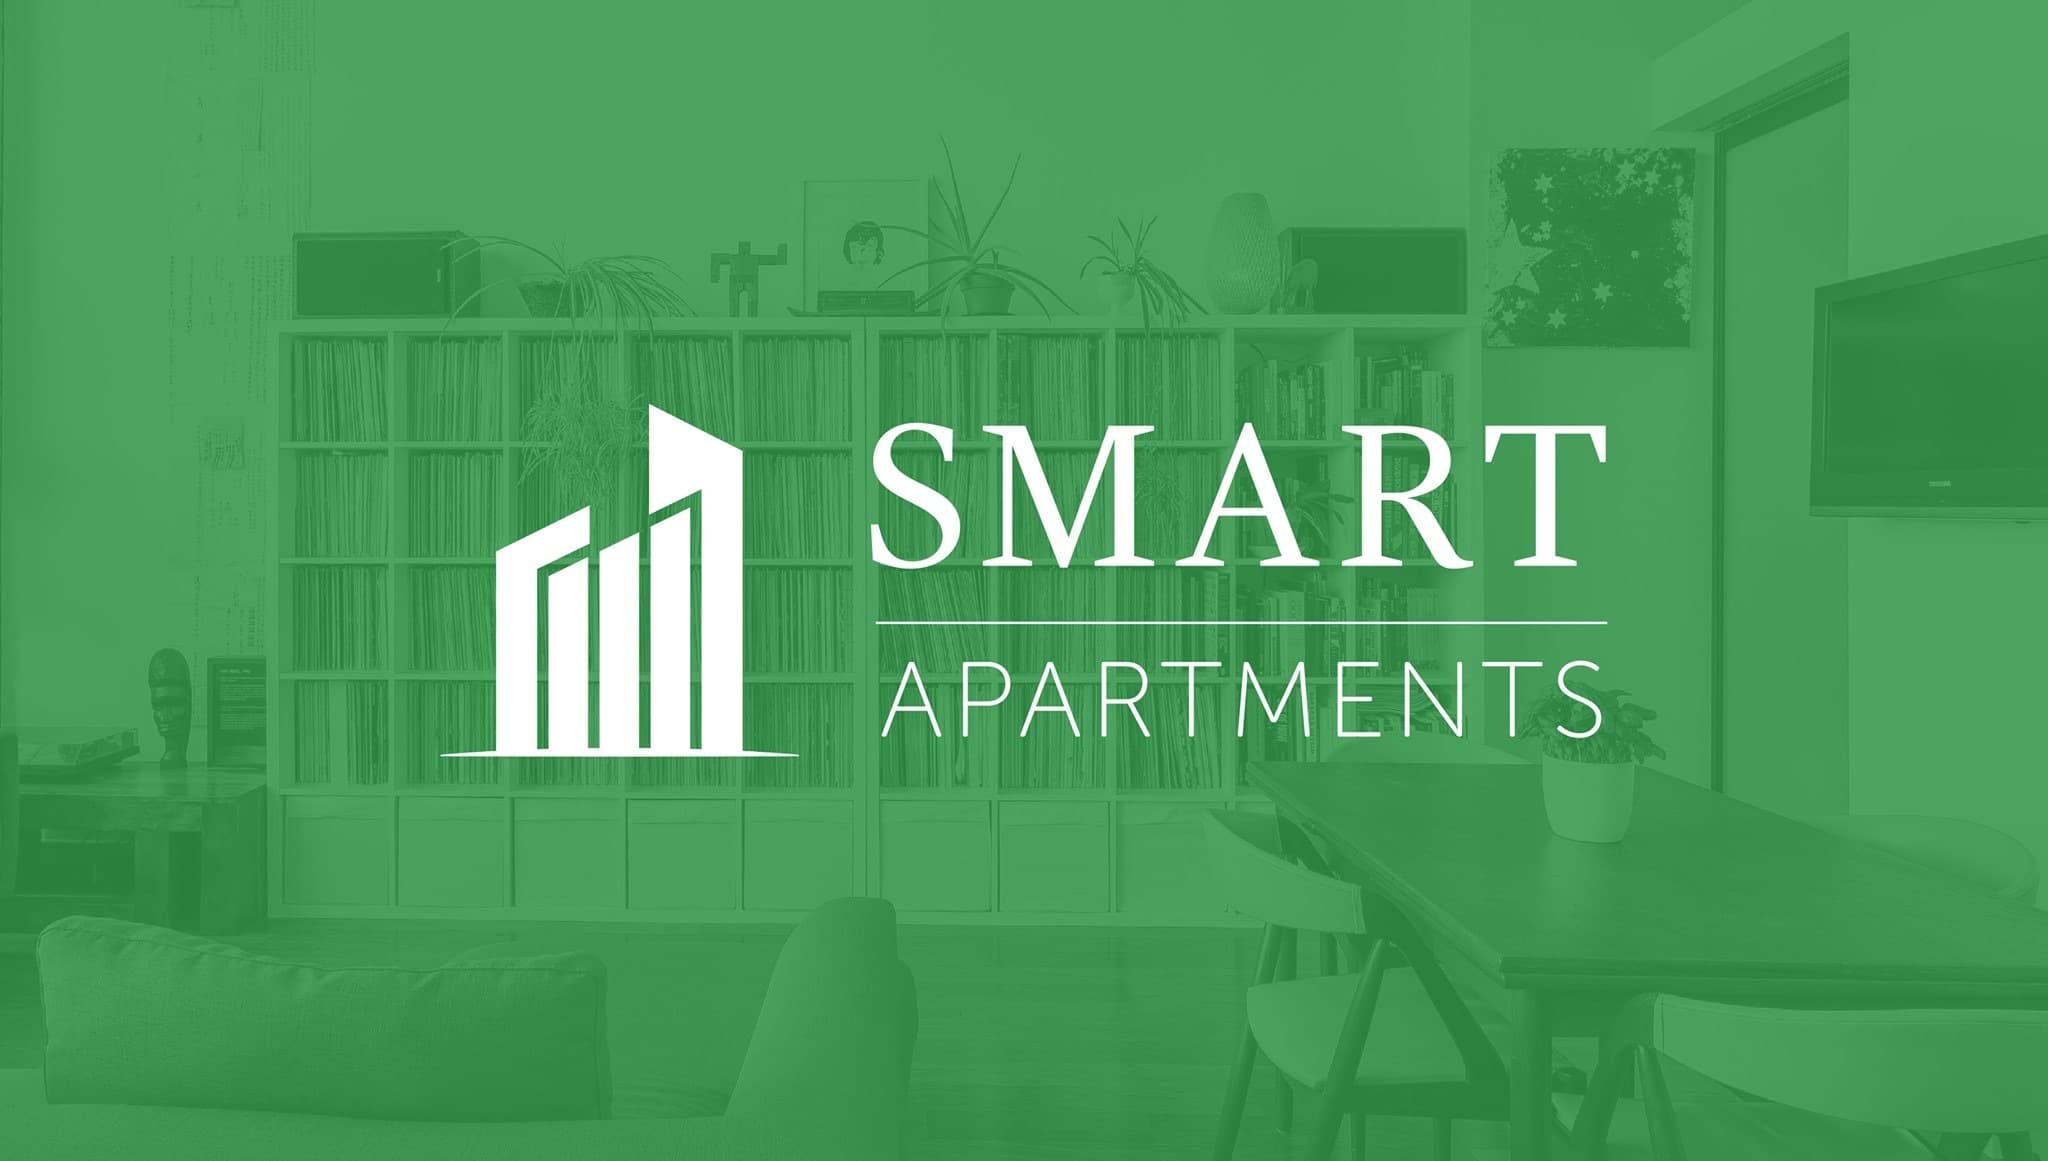 Smart Apartments image